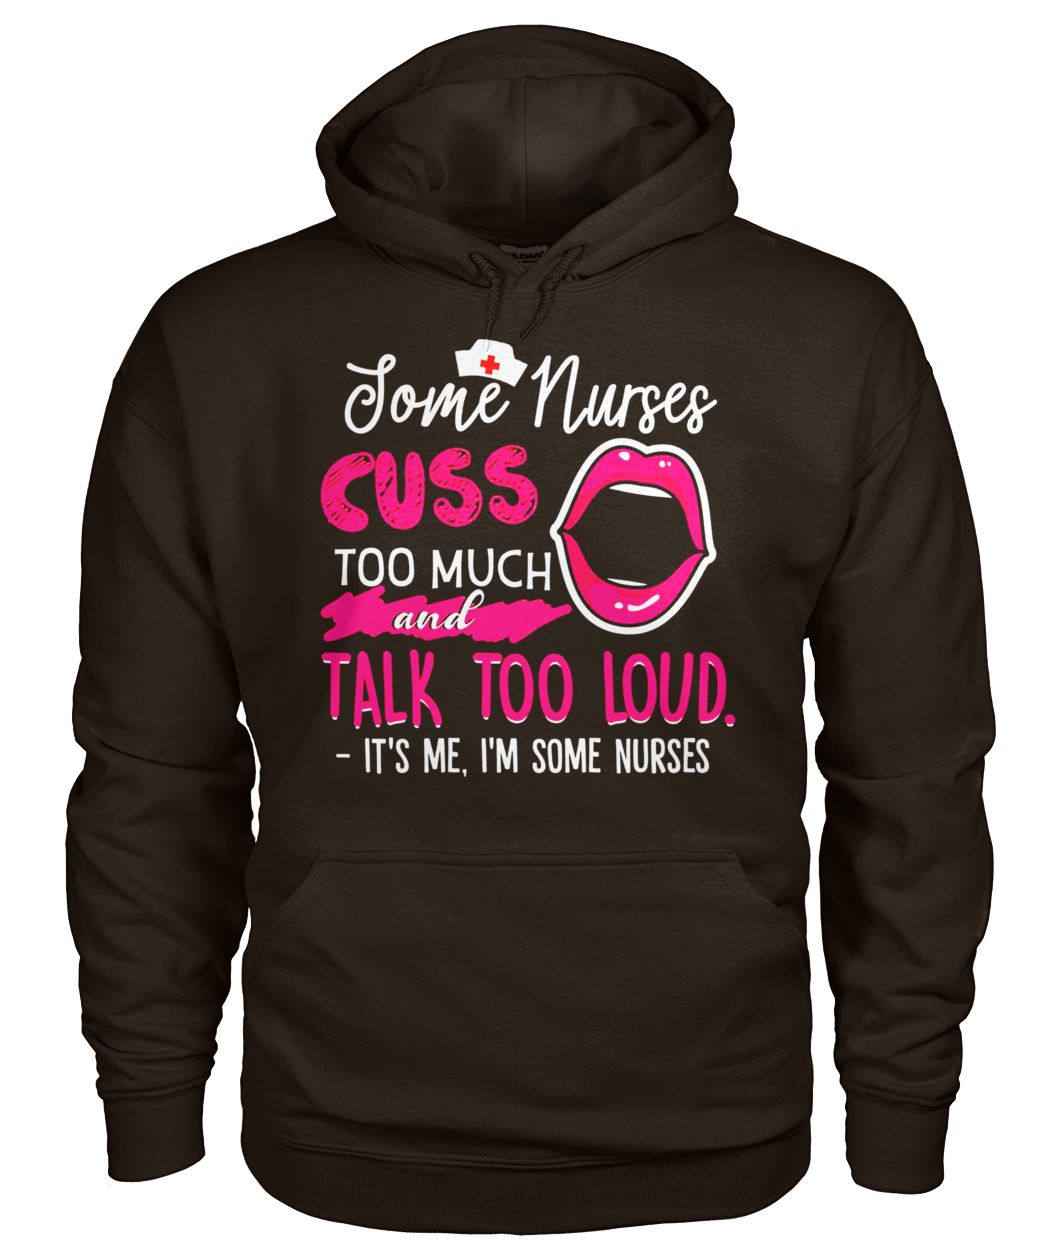 Some nurses cuss to much and talk too loud it's me I'm some nurses gildan hoodie